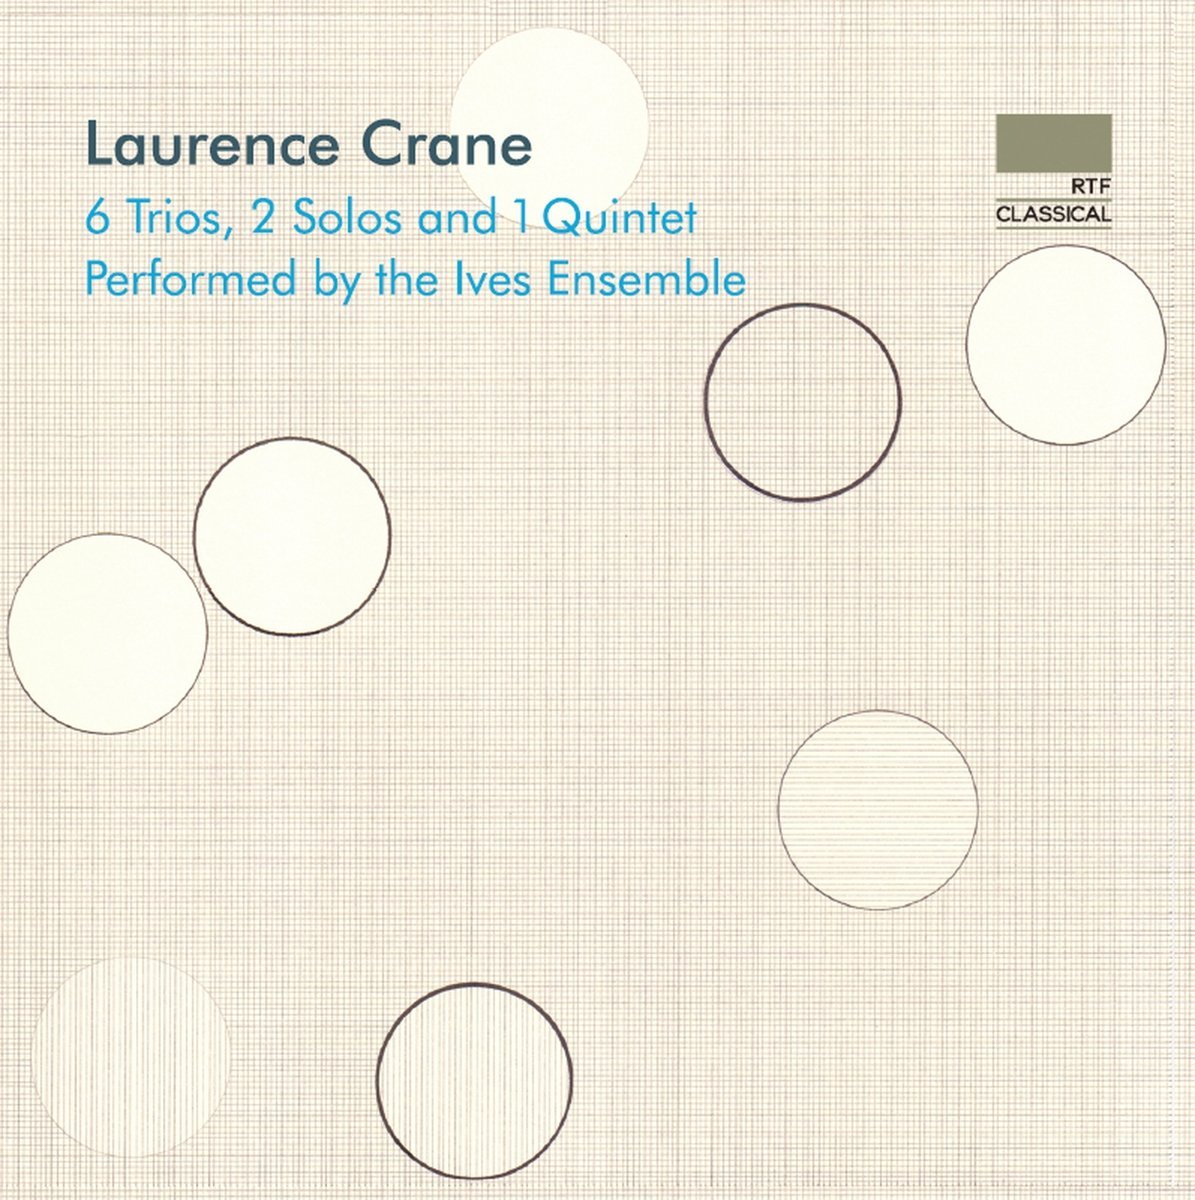 Laurence Crane - 6 Trios, 2 Solos and 1 Quintet